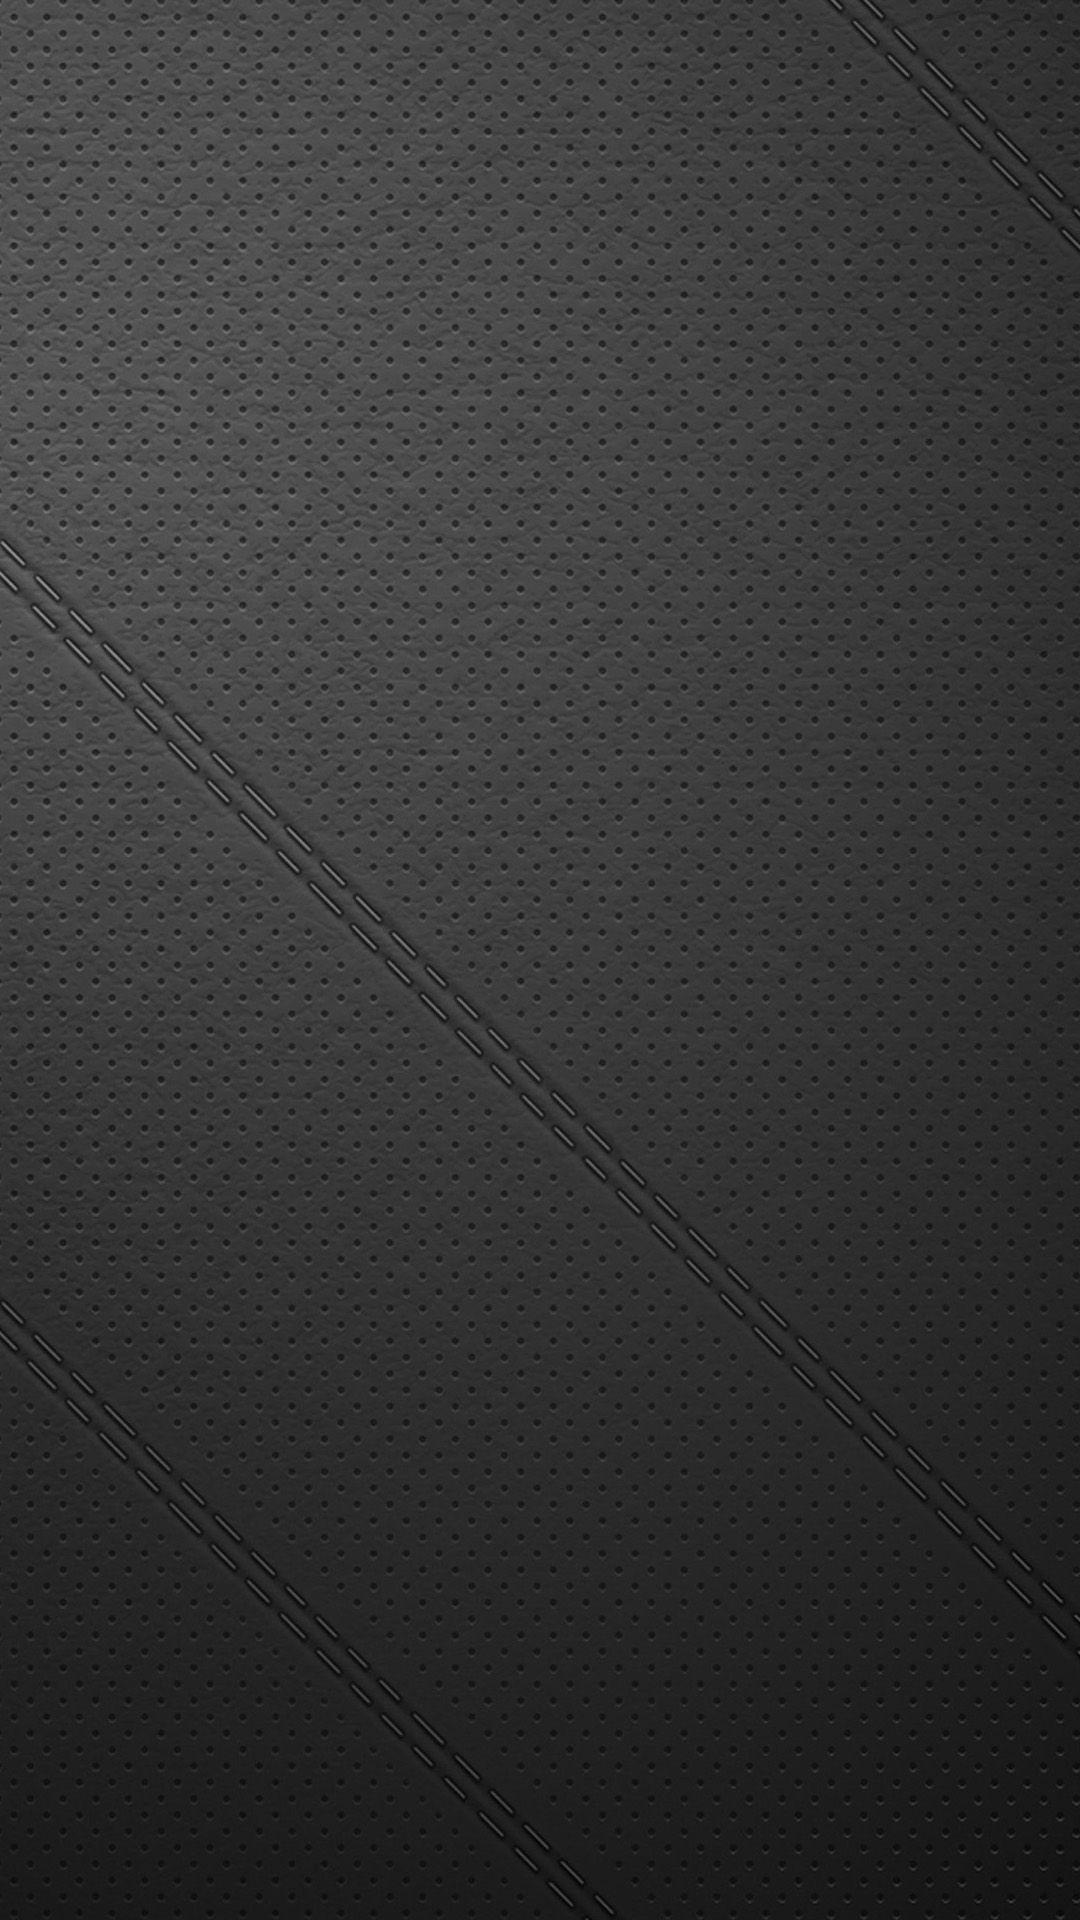 Black leather Samsung wallpaper, Samsung Galaxy S Galaxy S4